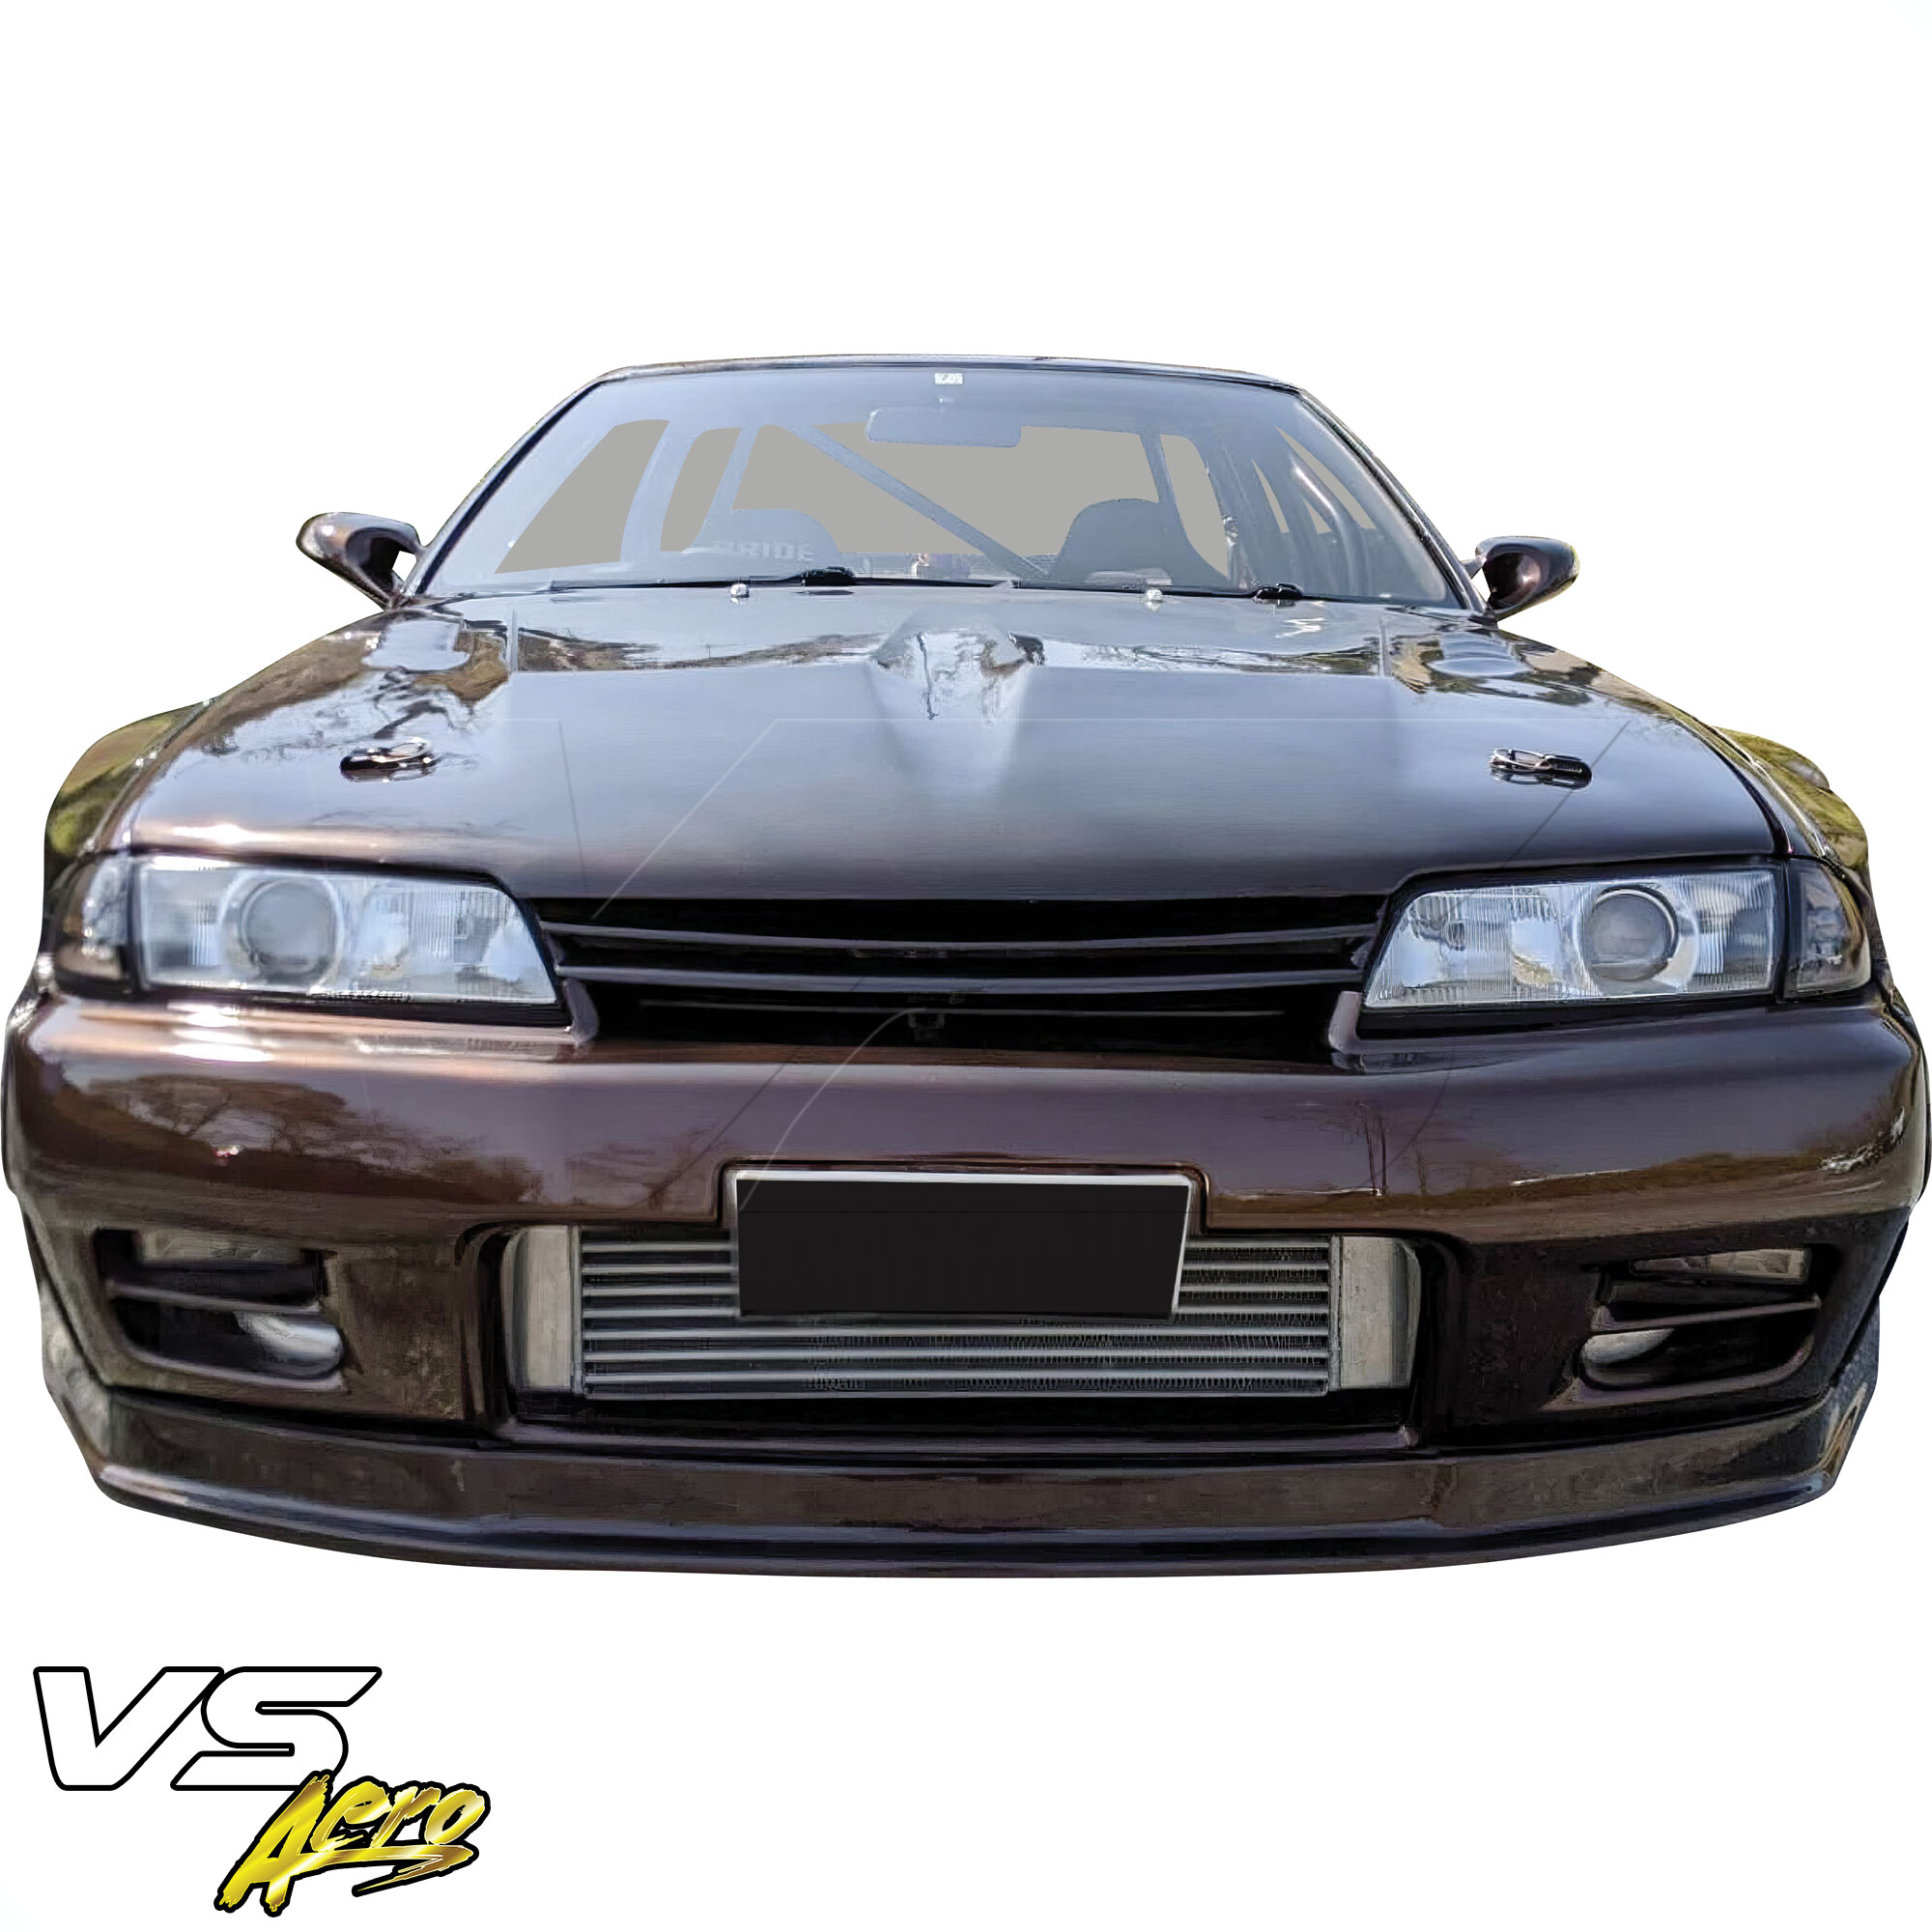 VSaero FRP TKYO Wide Body Front Lip > Nissan Skyline R32 1990-1994 > 2dr Coupe - Image 12